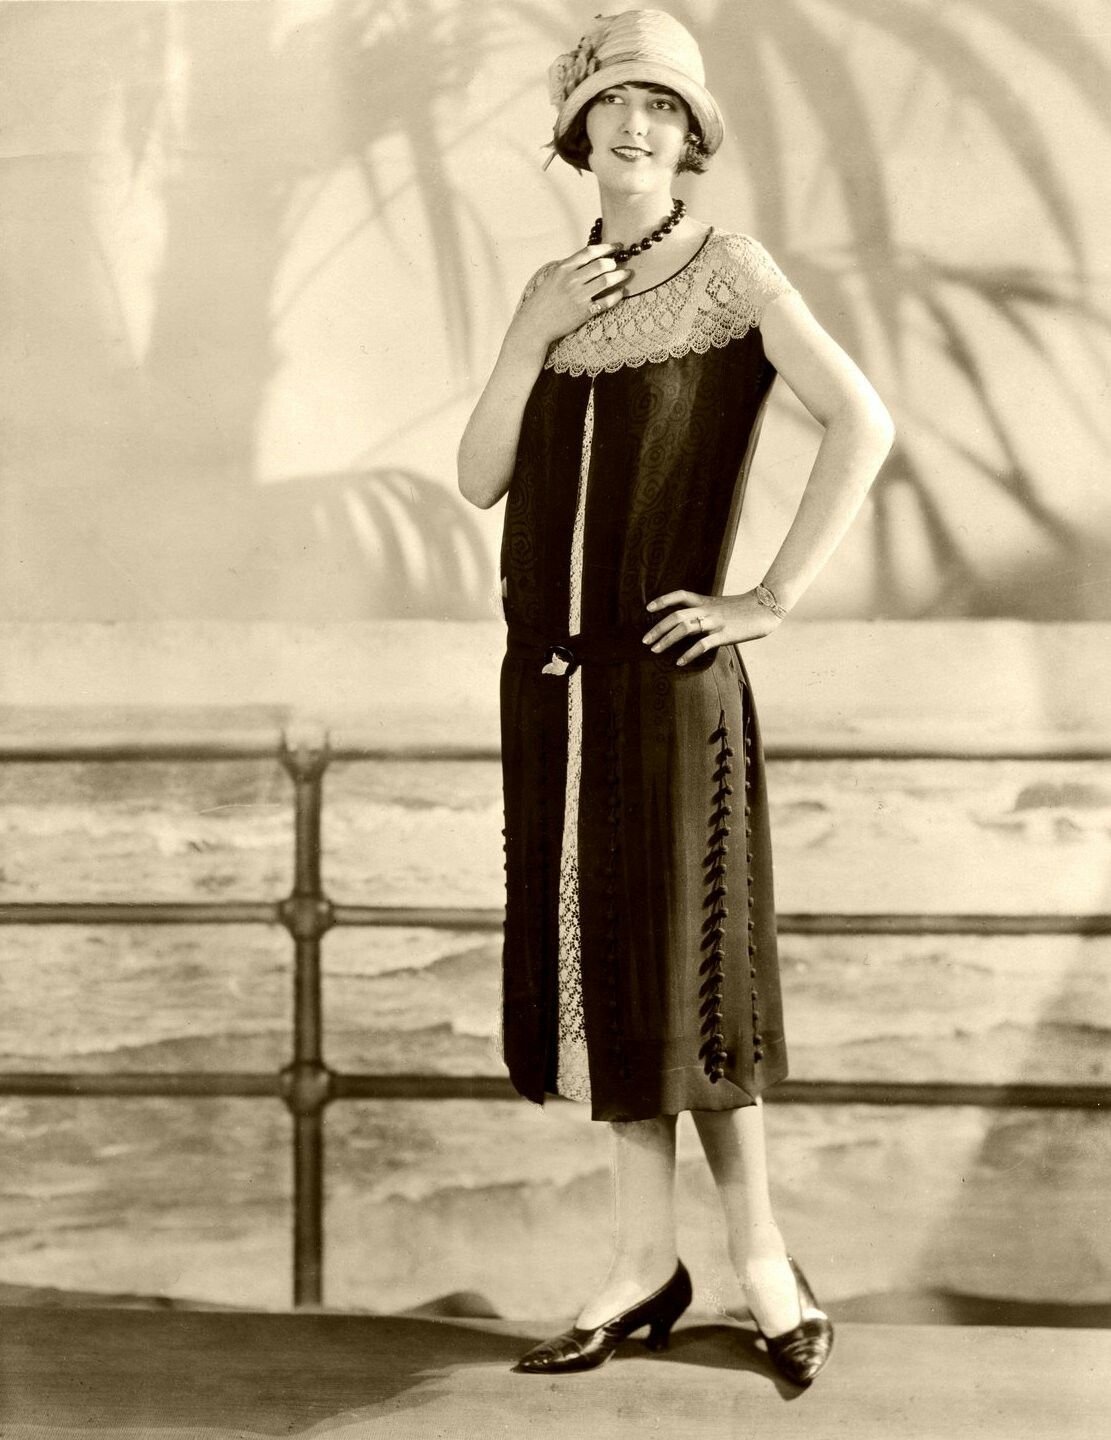 Фото 20х. Мода 20-х годов 20-го века. 20е Америка мода. 20е годы 20 века Америка одежда женская. Мода 20 х 30х годов 20 века.